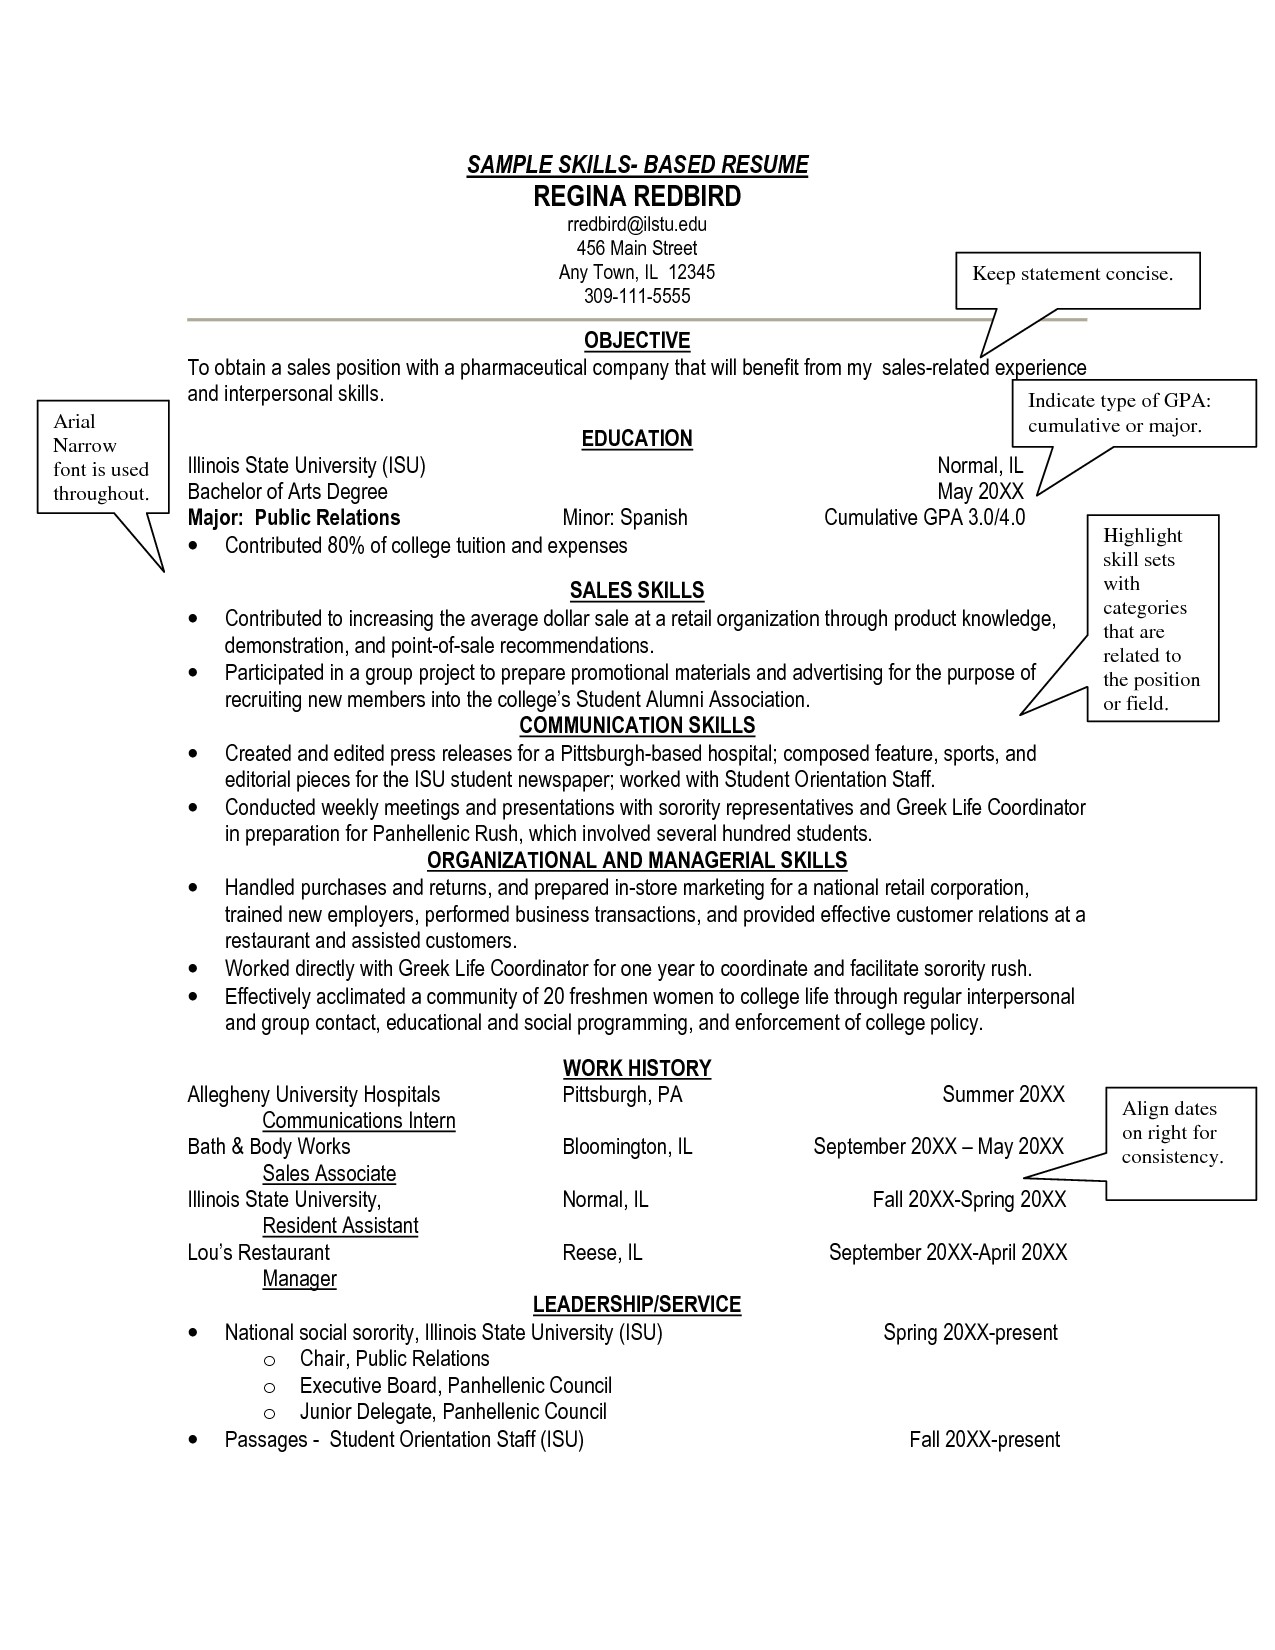 competency based resume sample